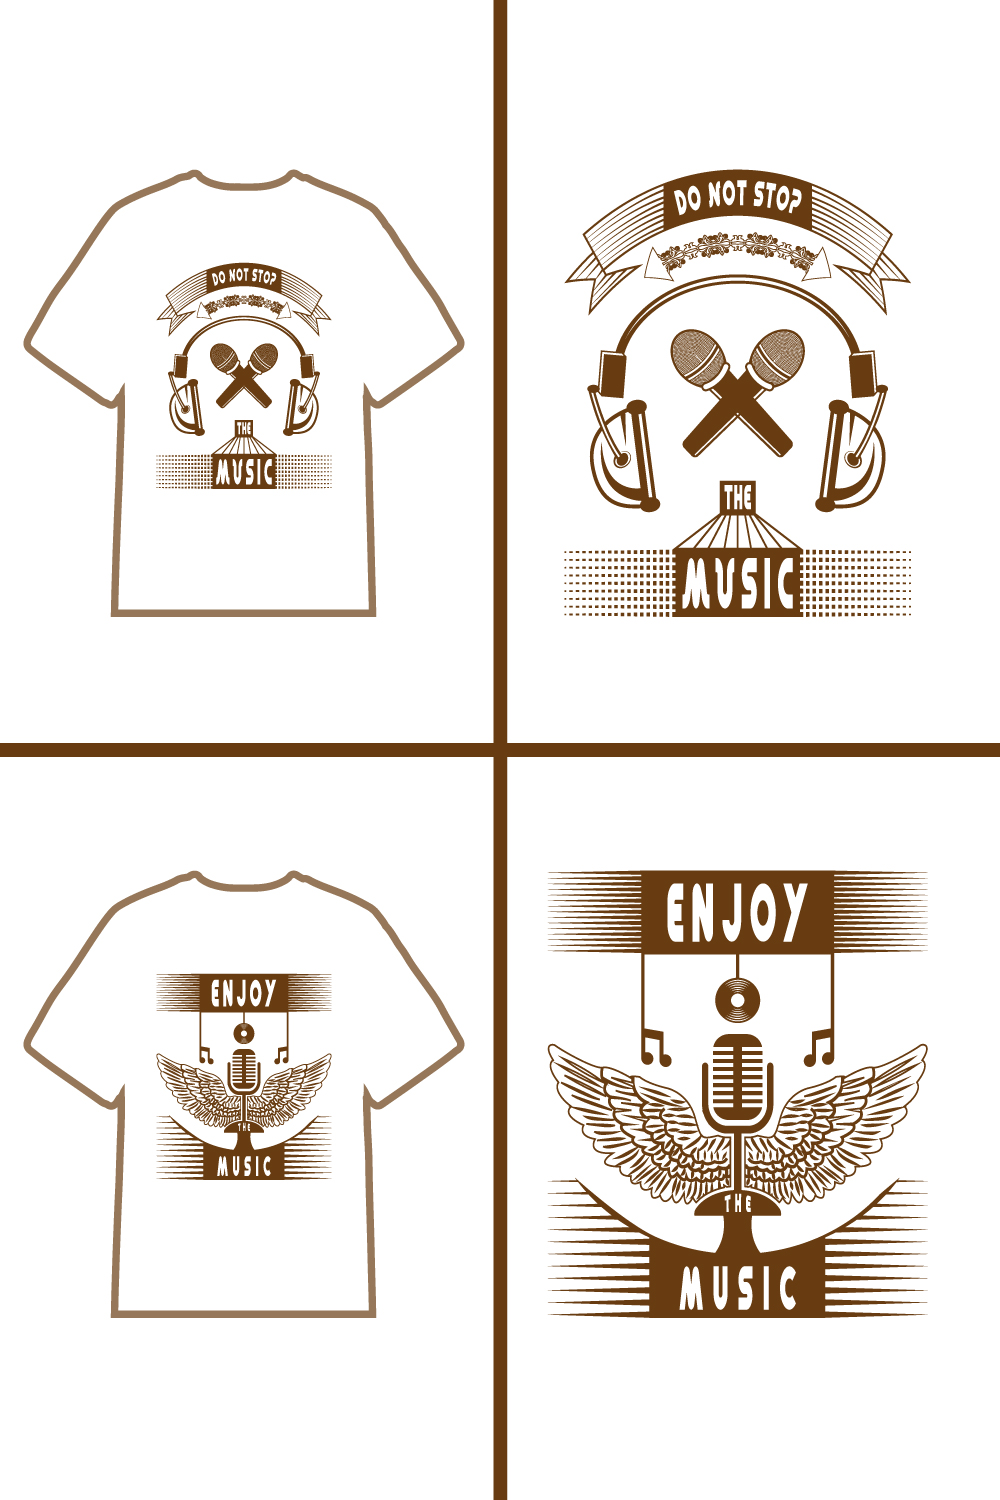 02 Music T-shirt designs pinterest preview image.